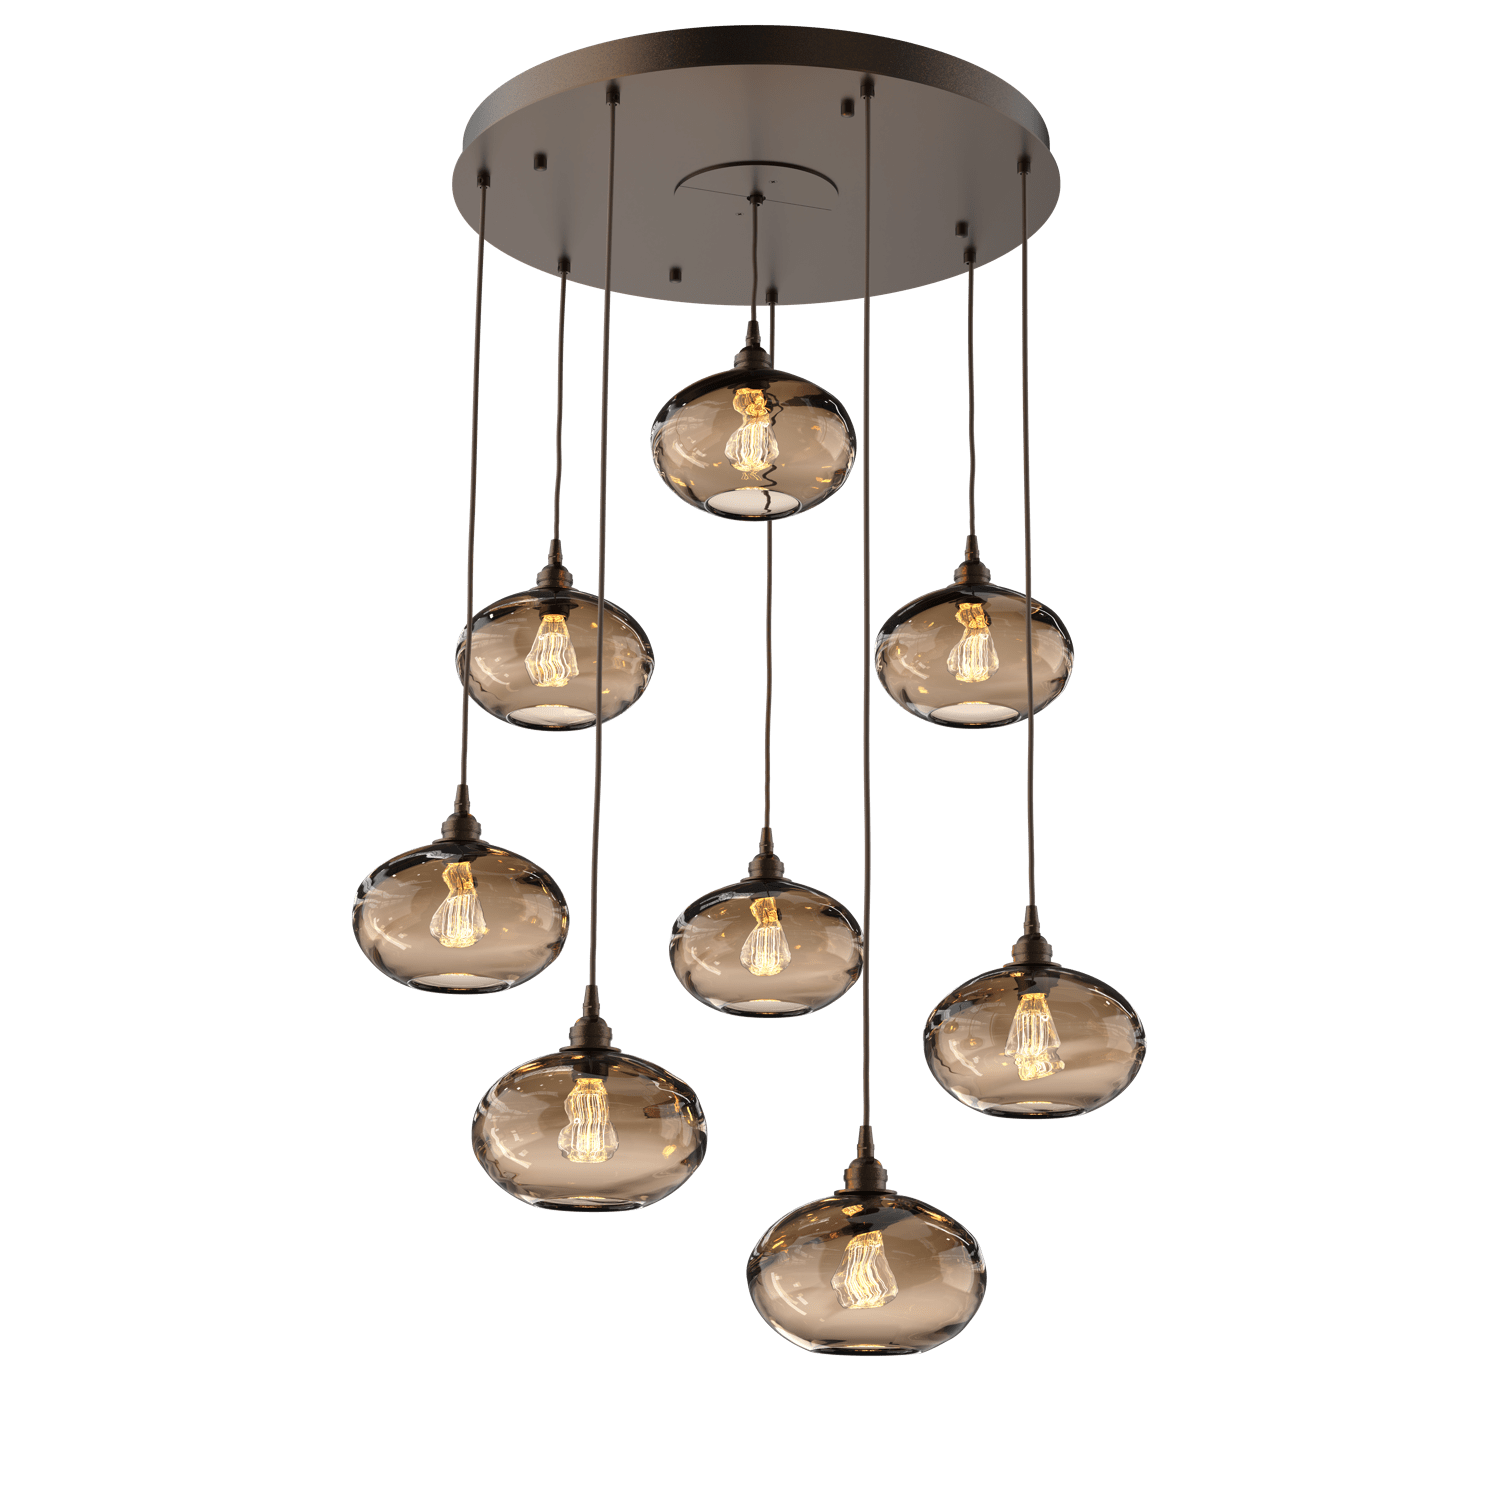 CHB0036-08-FB-OB-Hammerton-Studio-Optic-Blown-Glass-Coppa-8-light-round-pendant-chandelier-with-flat-bronze-finish-and-optic-bronze-blown-glass-shades-and-incandescent-lamping